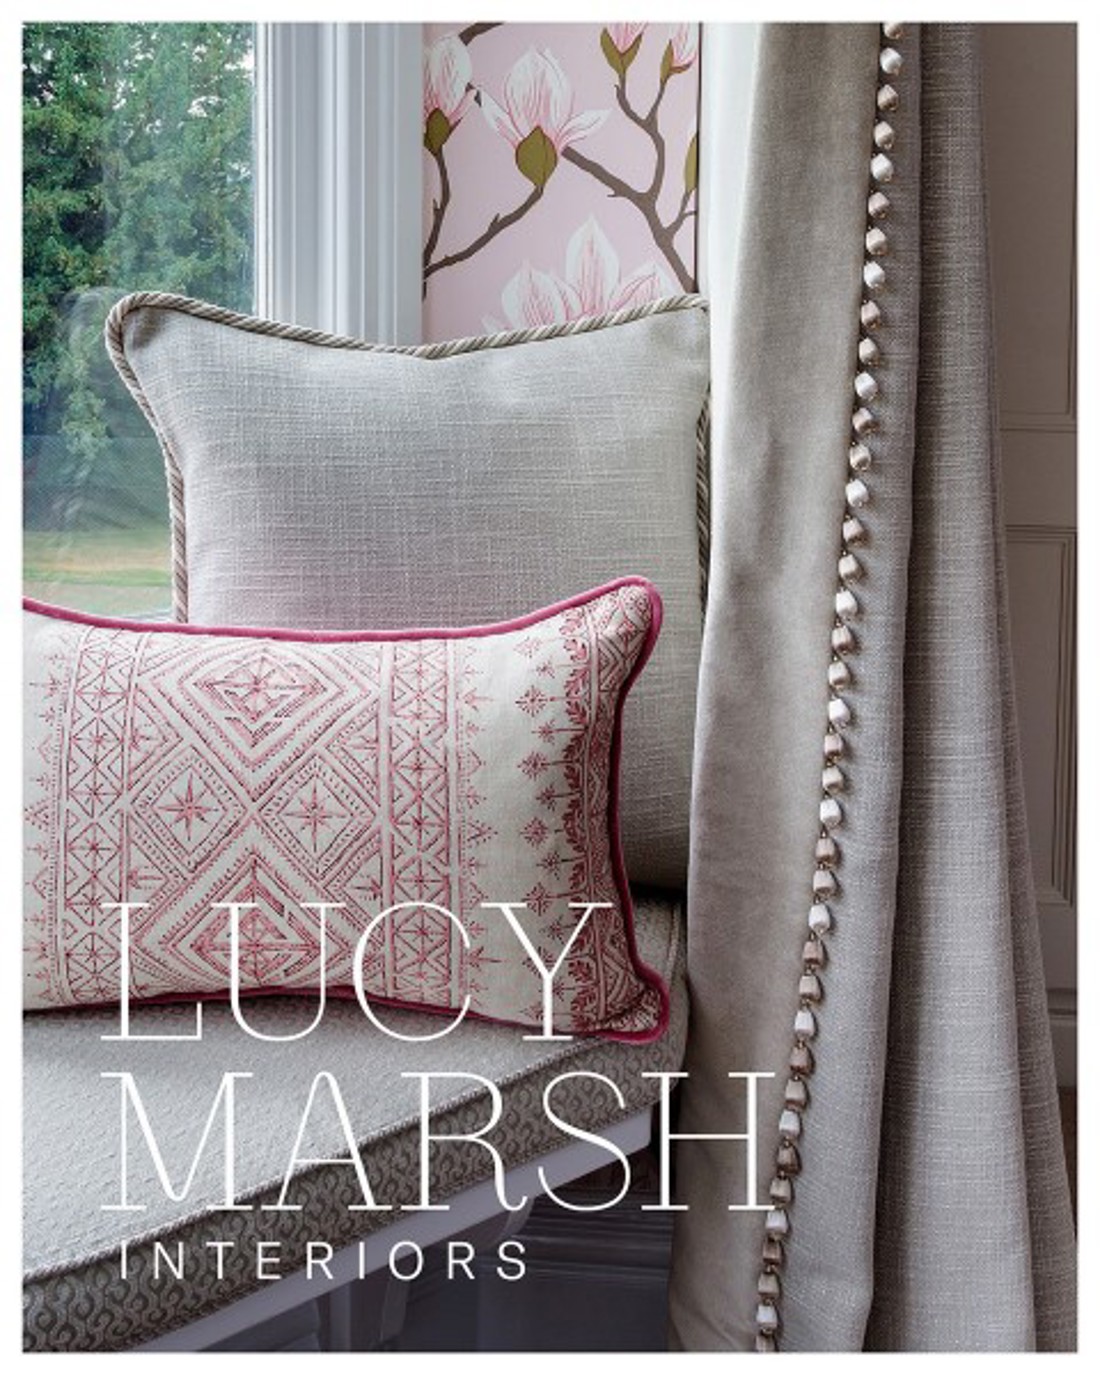 Lucy Marsh Interiors Cushions in window